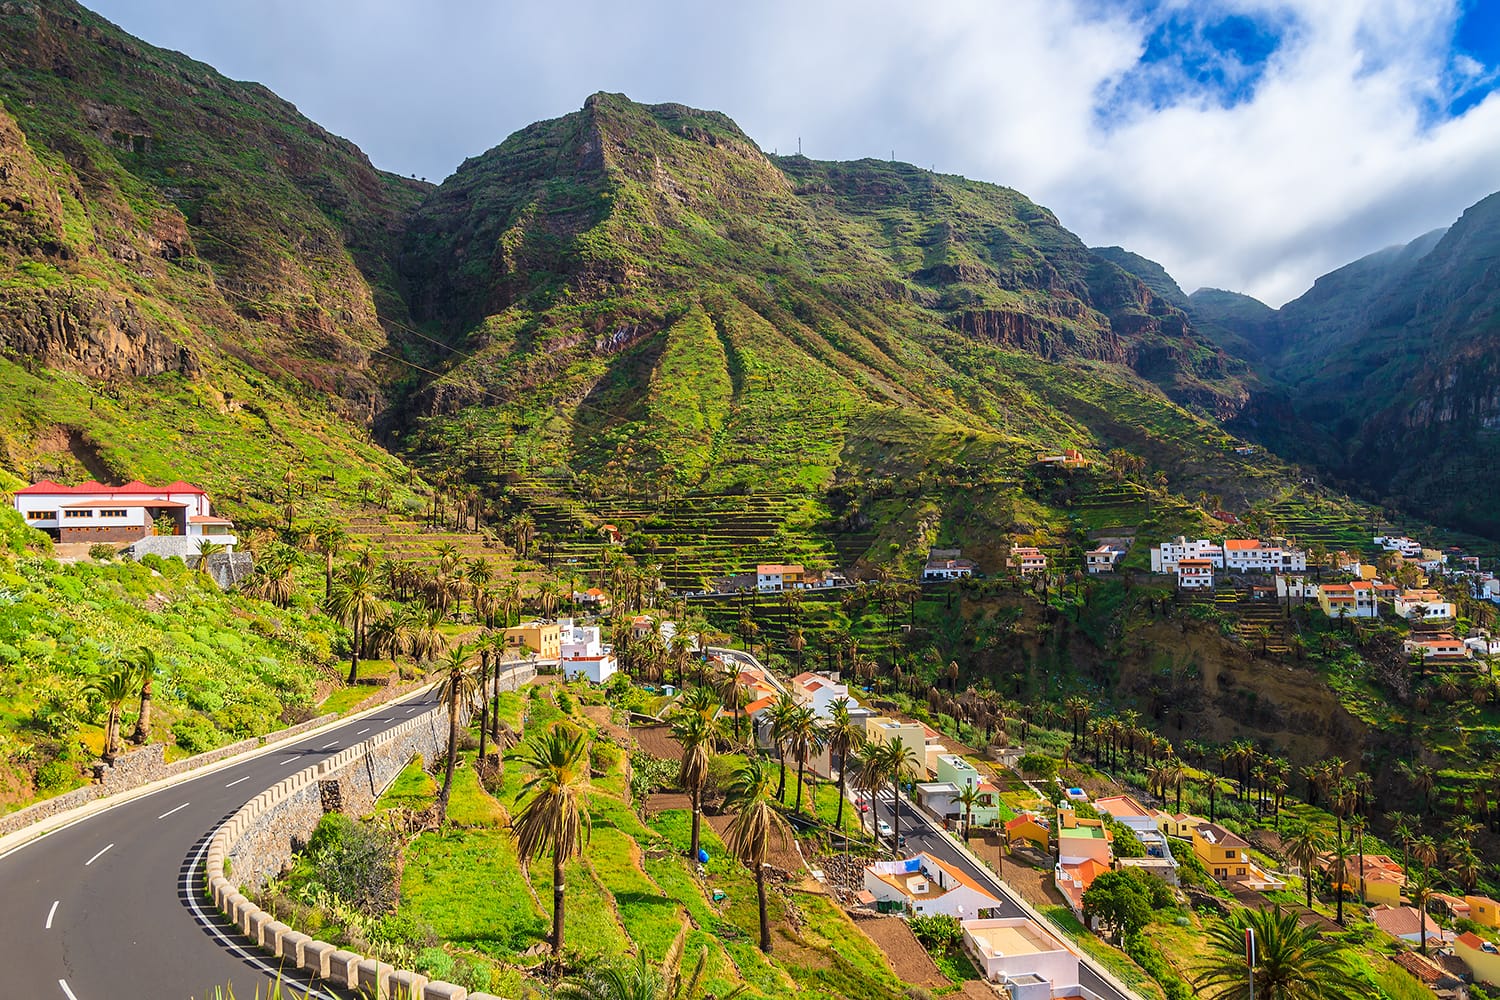 Road in Valle Gran Rey mountain valley, La Gomera island, Canary Islands, Spain